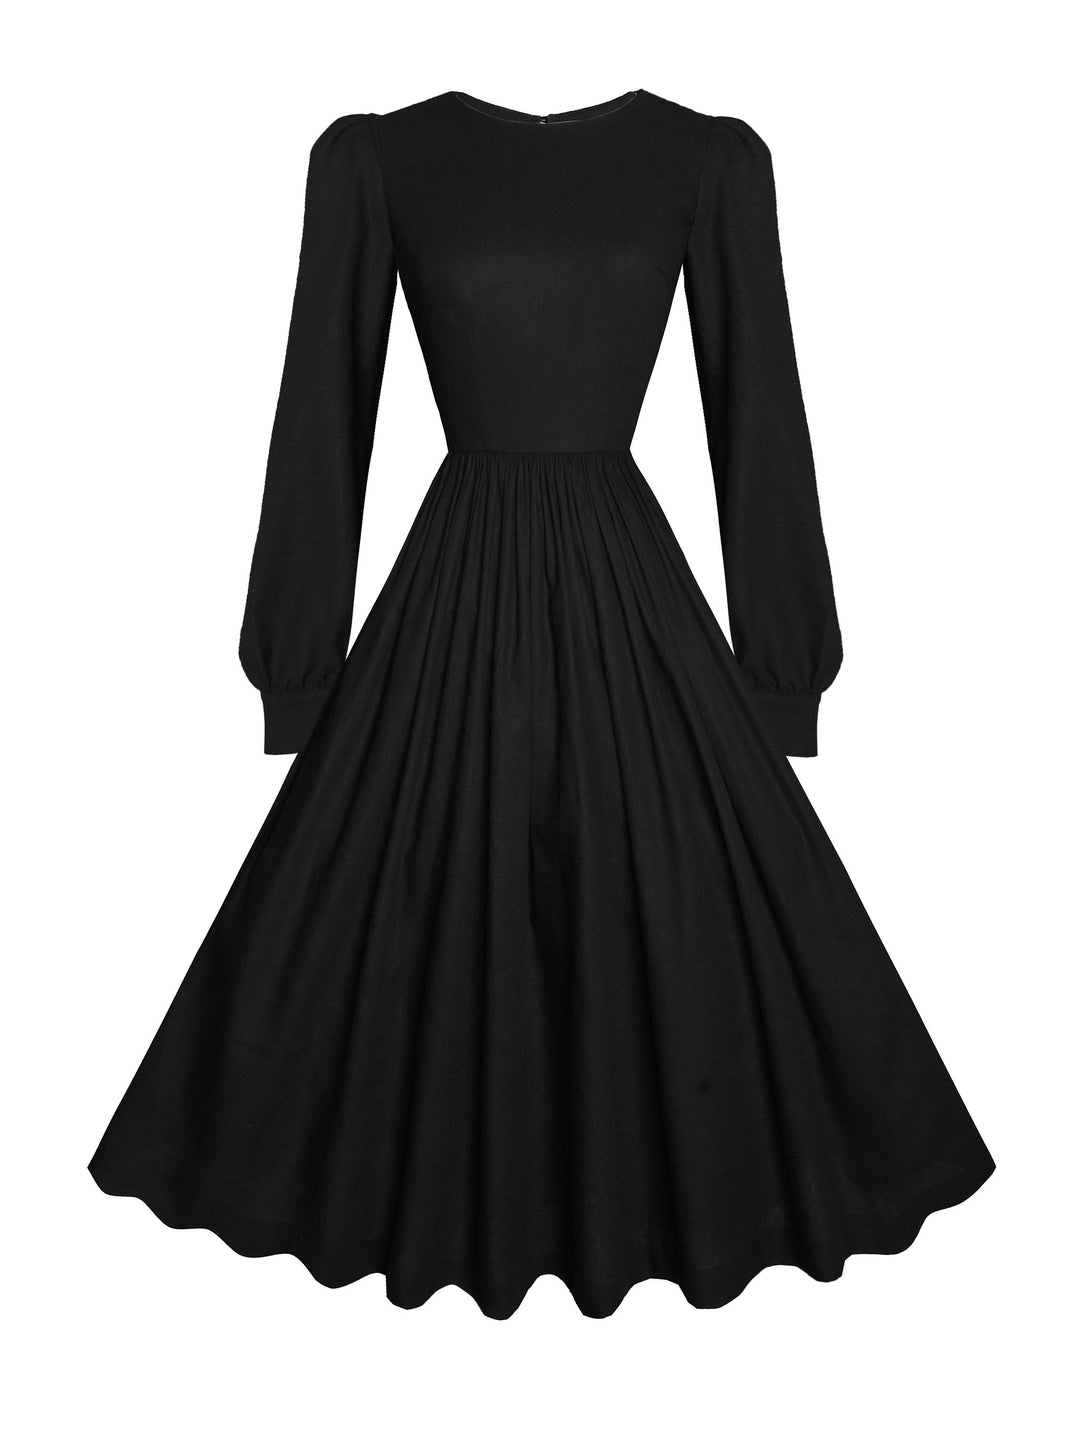 MTO - Agnes Dress in Midnight Black Linen